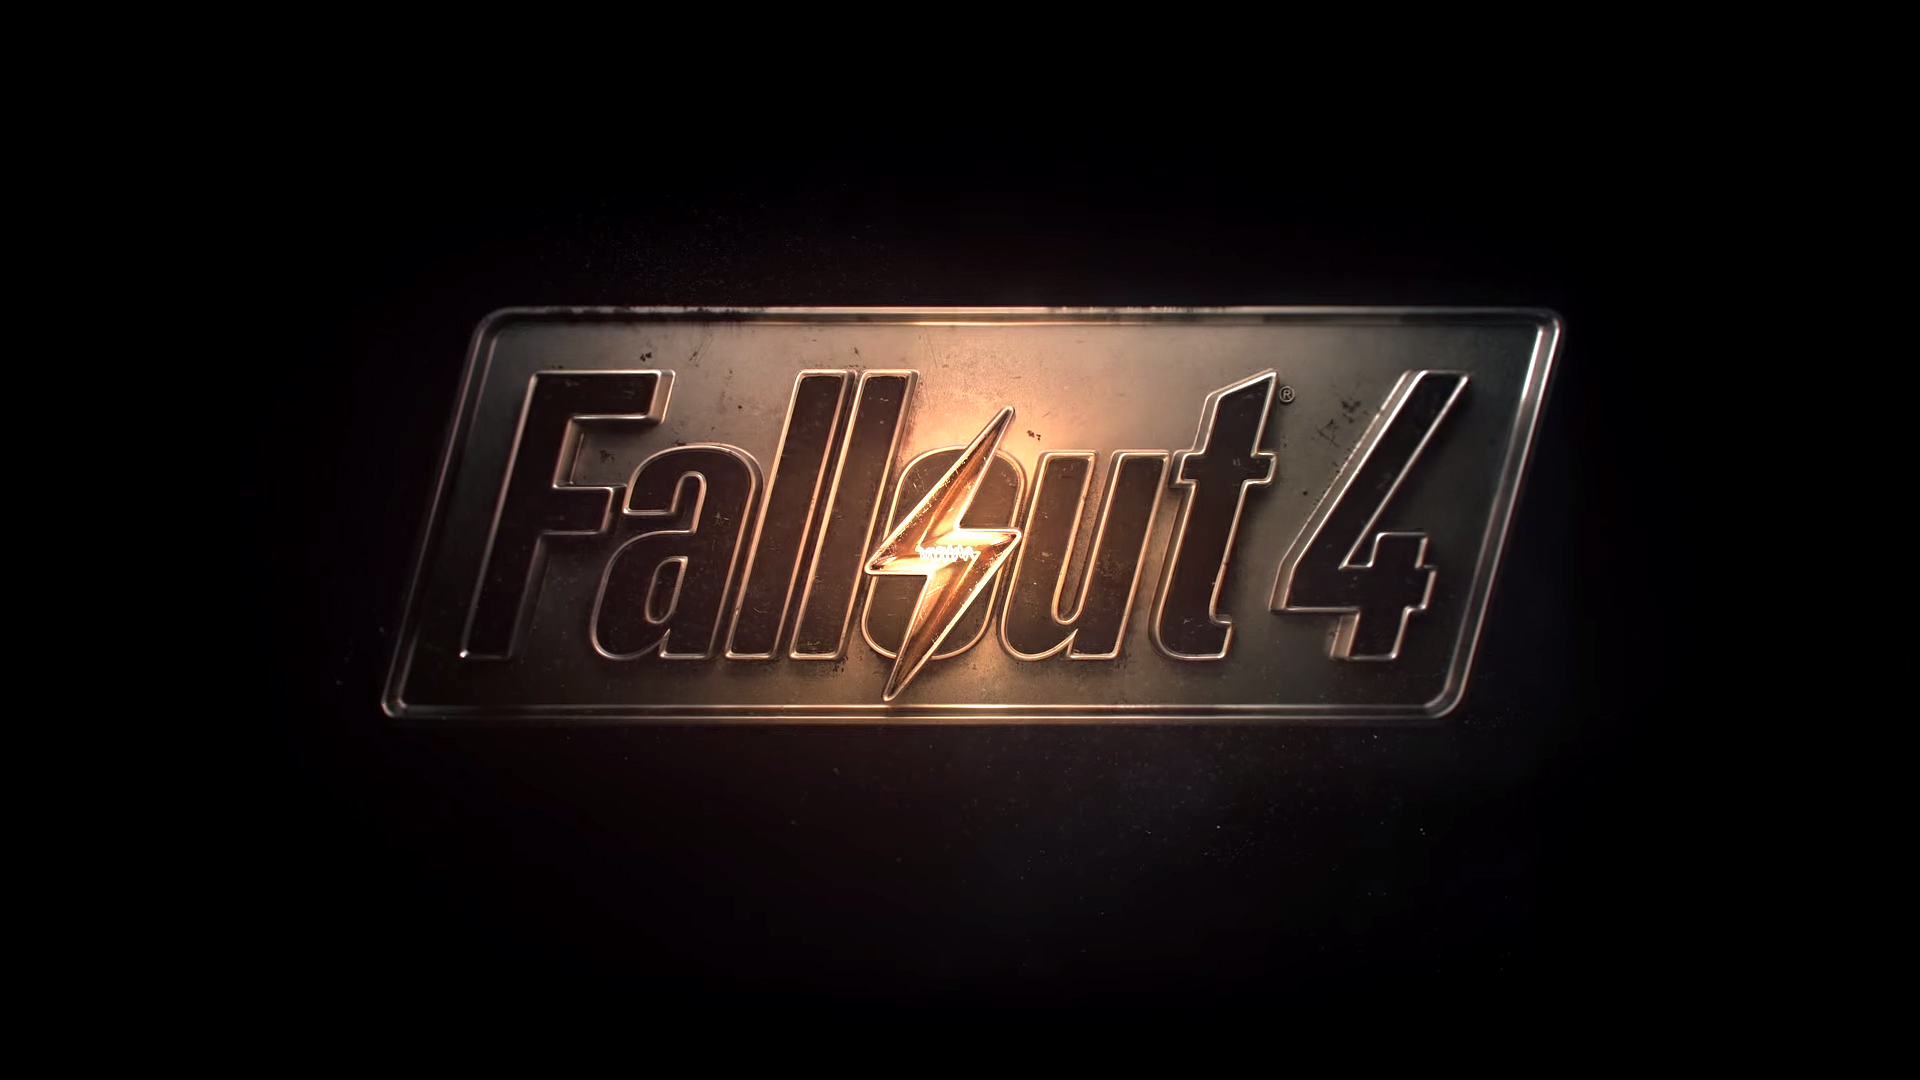 Fallout 4 logo